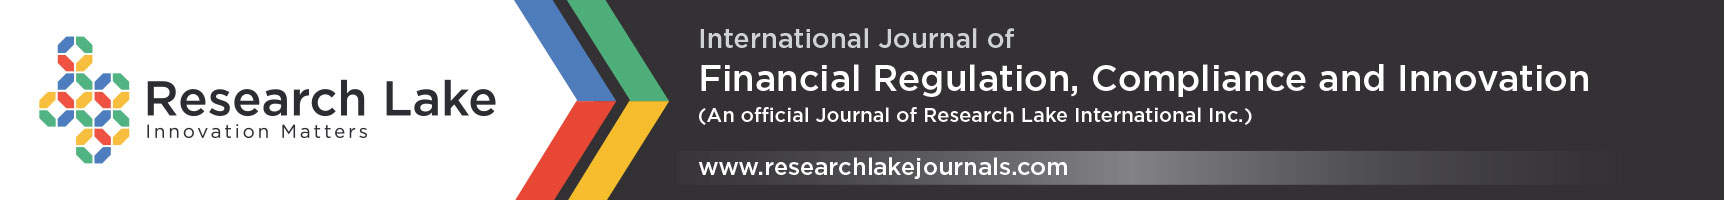 International Journal of Financial Regulation, Compliance and Innovation